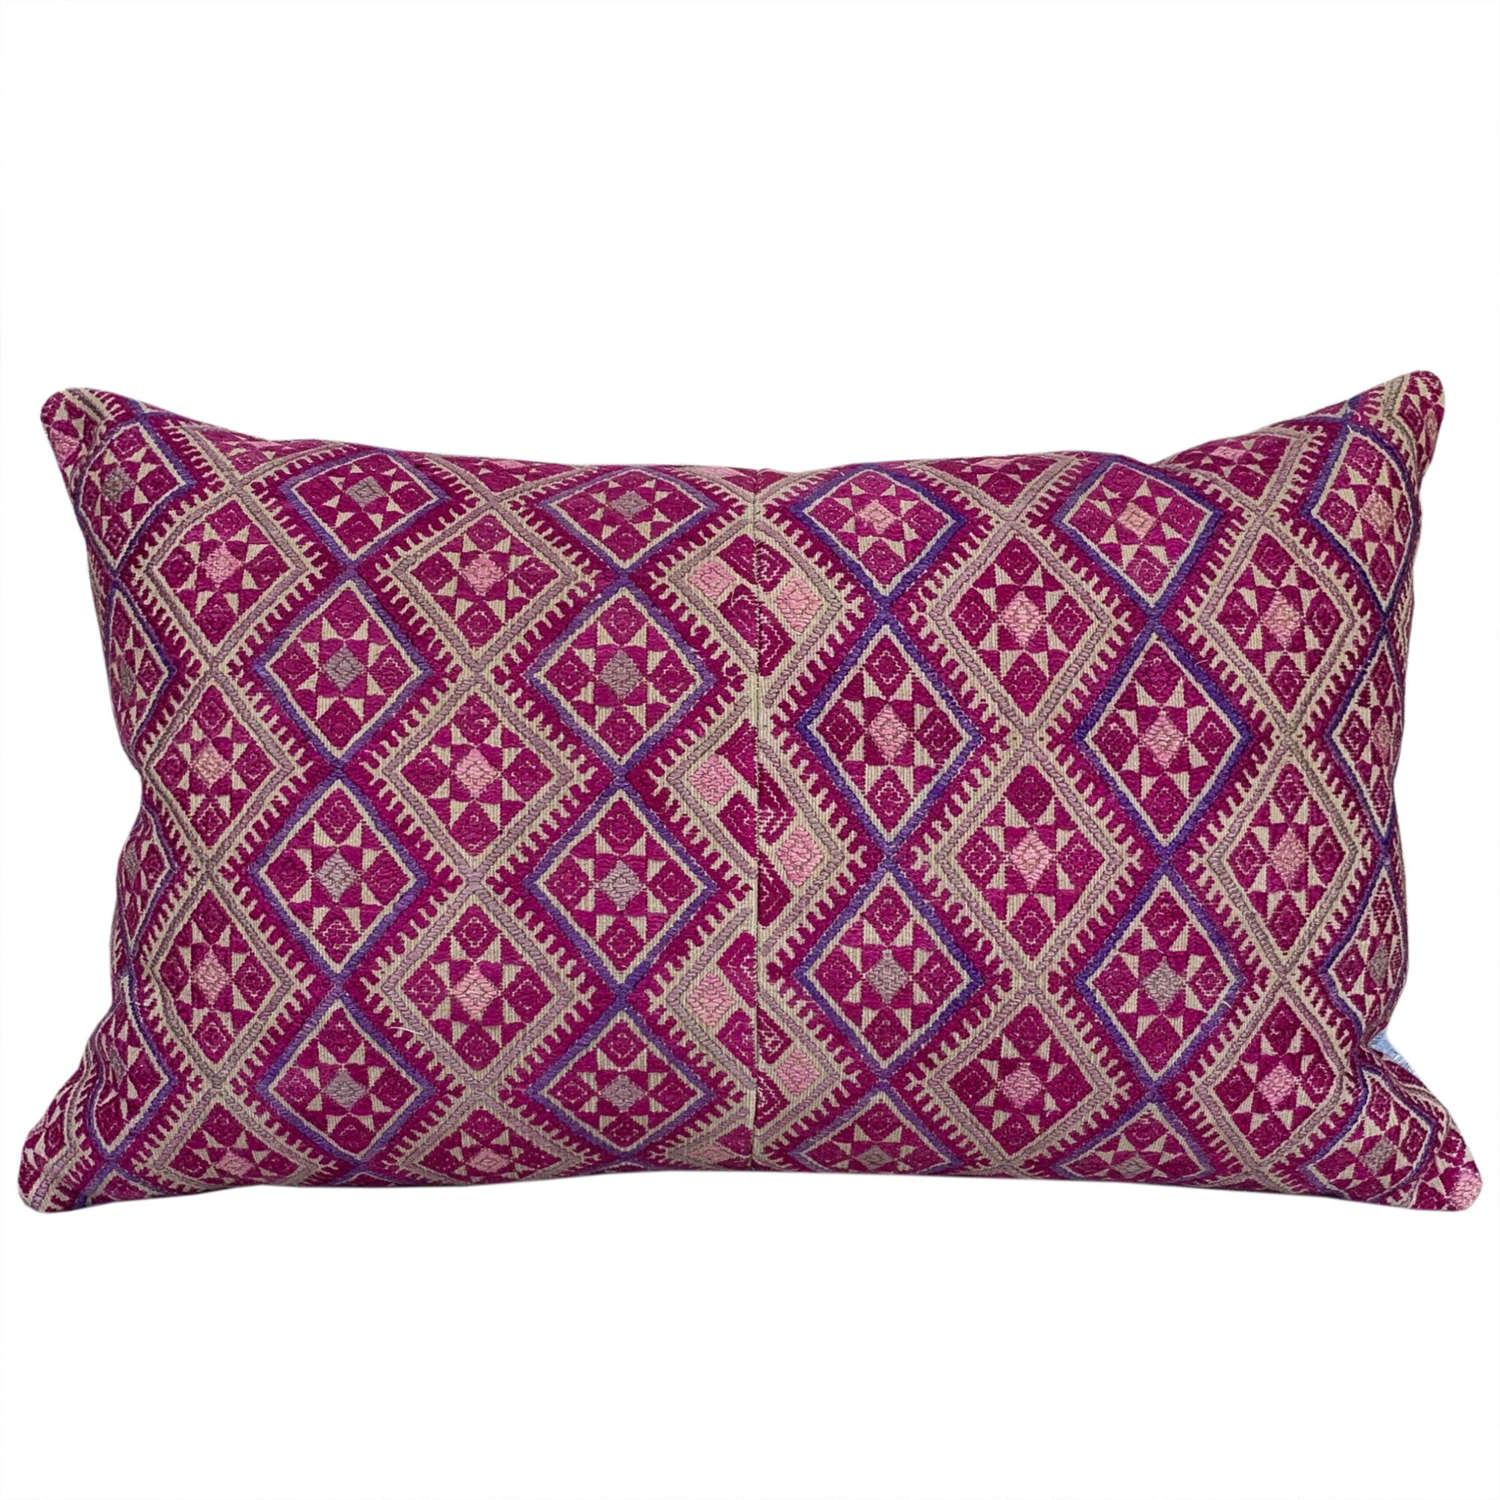 Pink Zhuang wedding blanket cushions